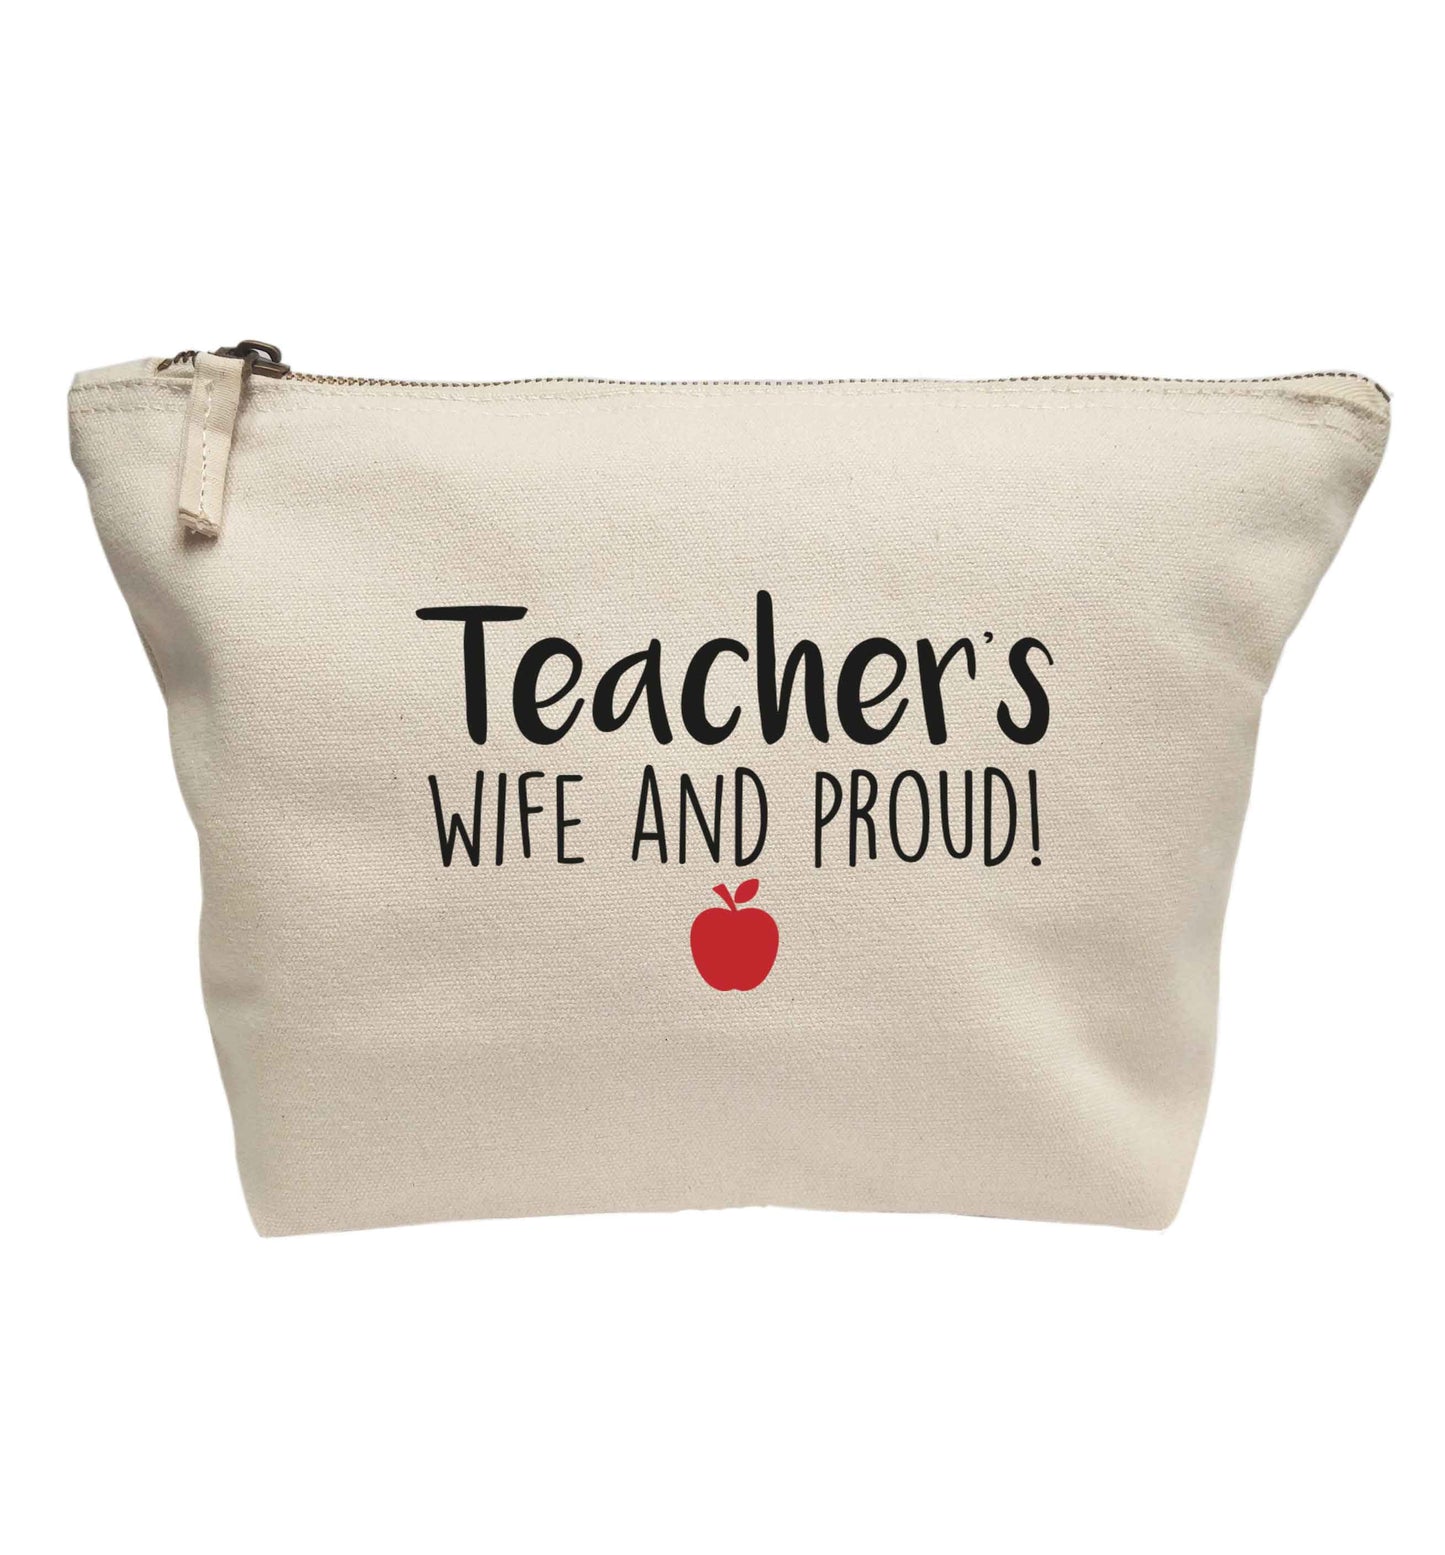 Teachers wife and proud | Makeup / wash bag